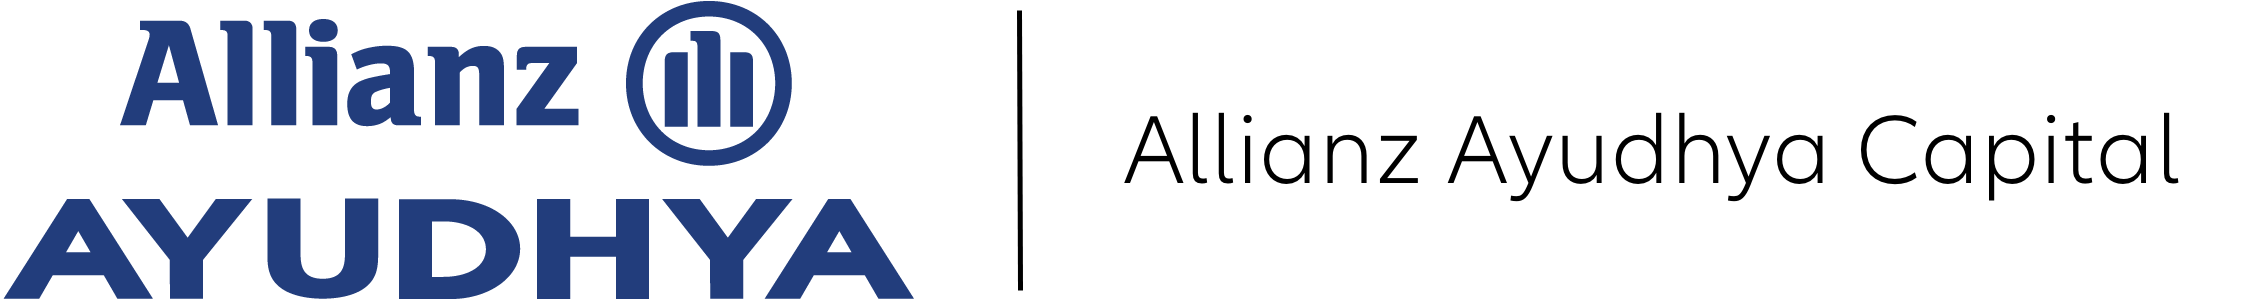 SRI AYUDHYA CAPITAL Brand Logo